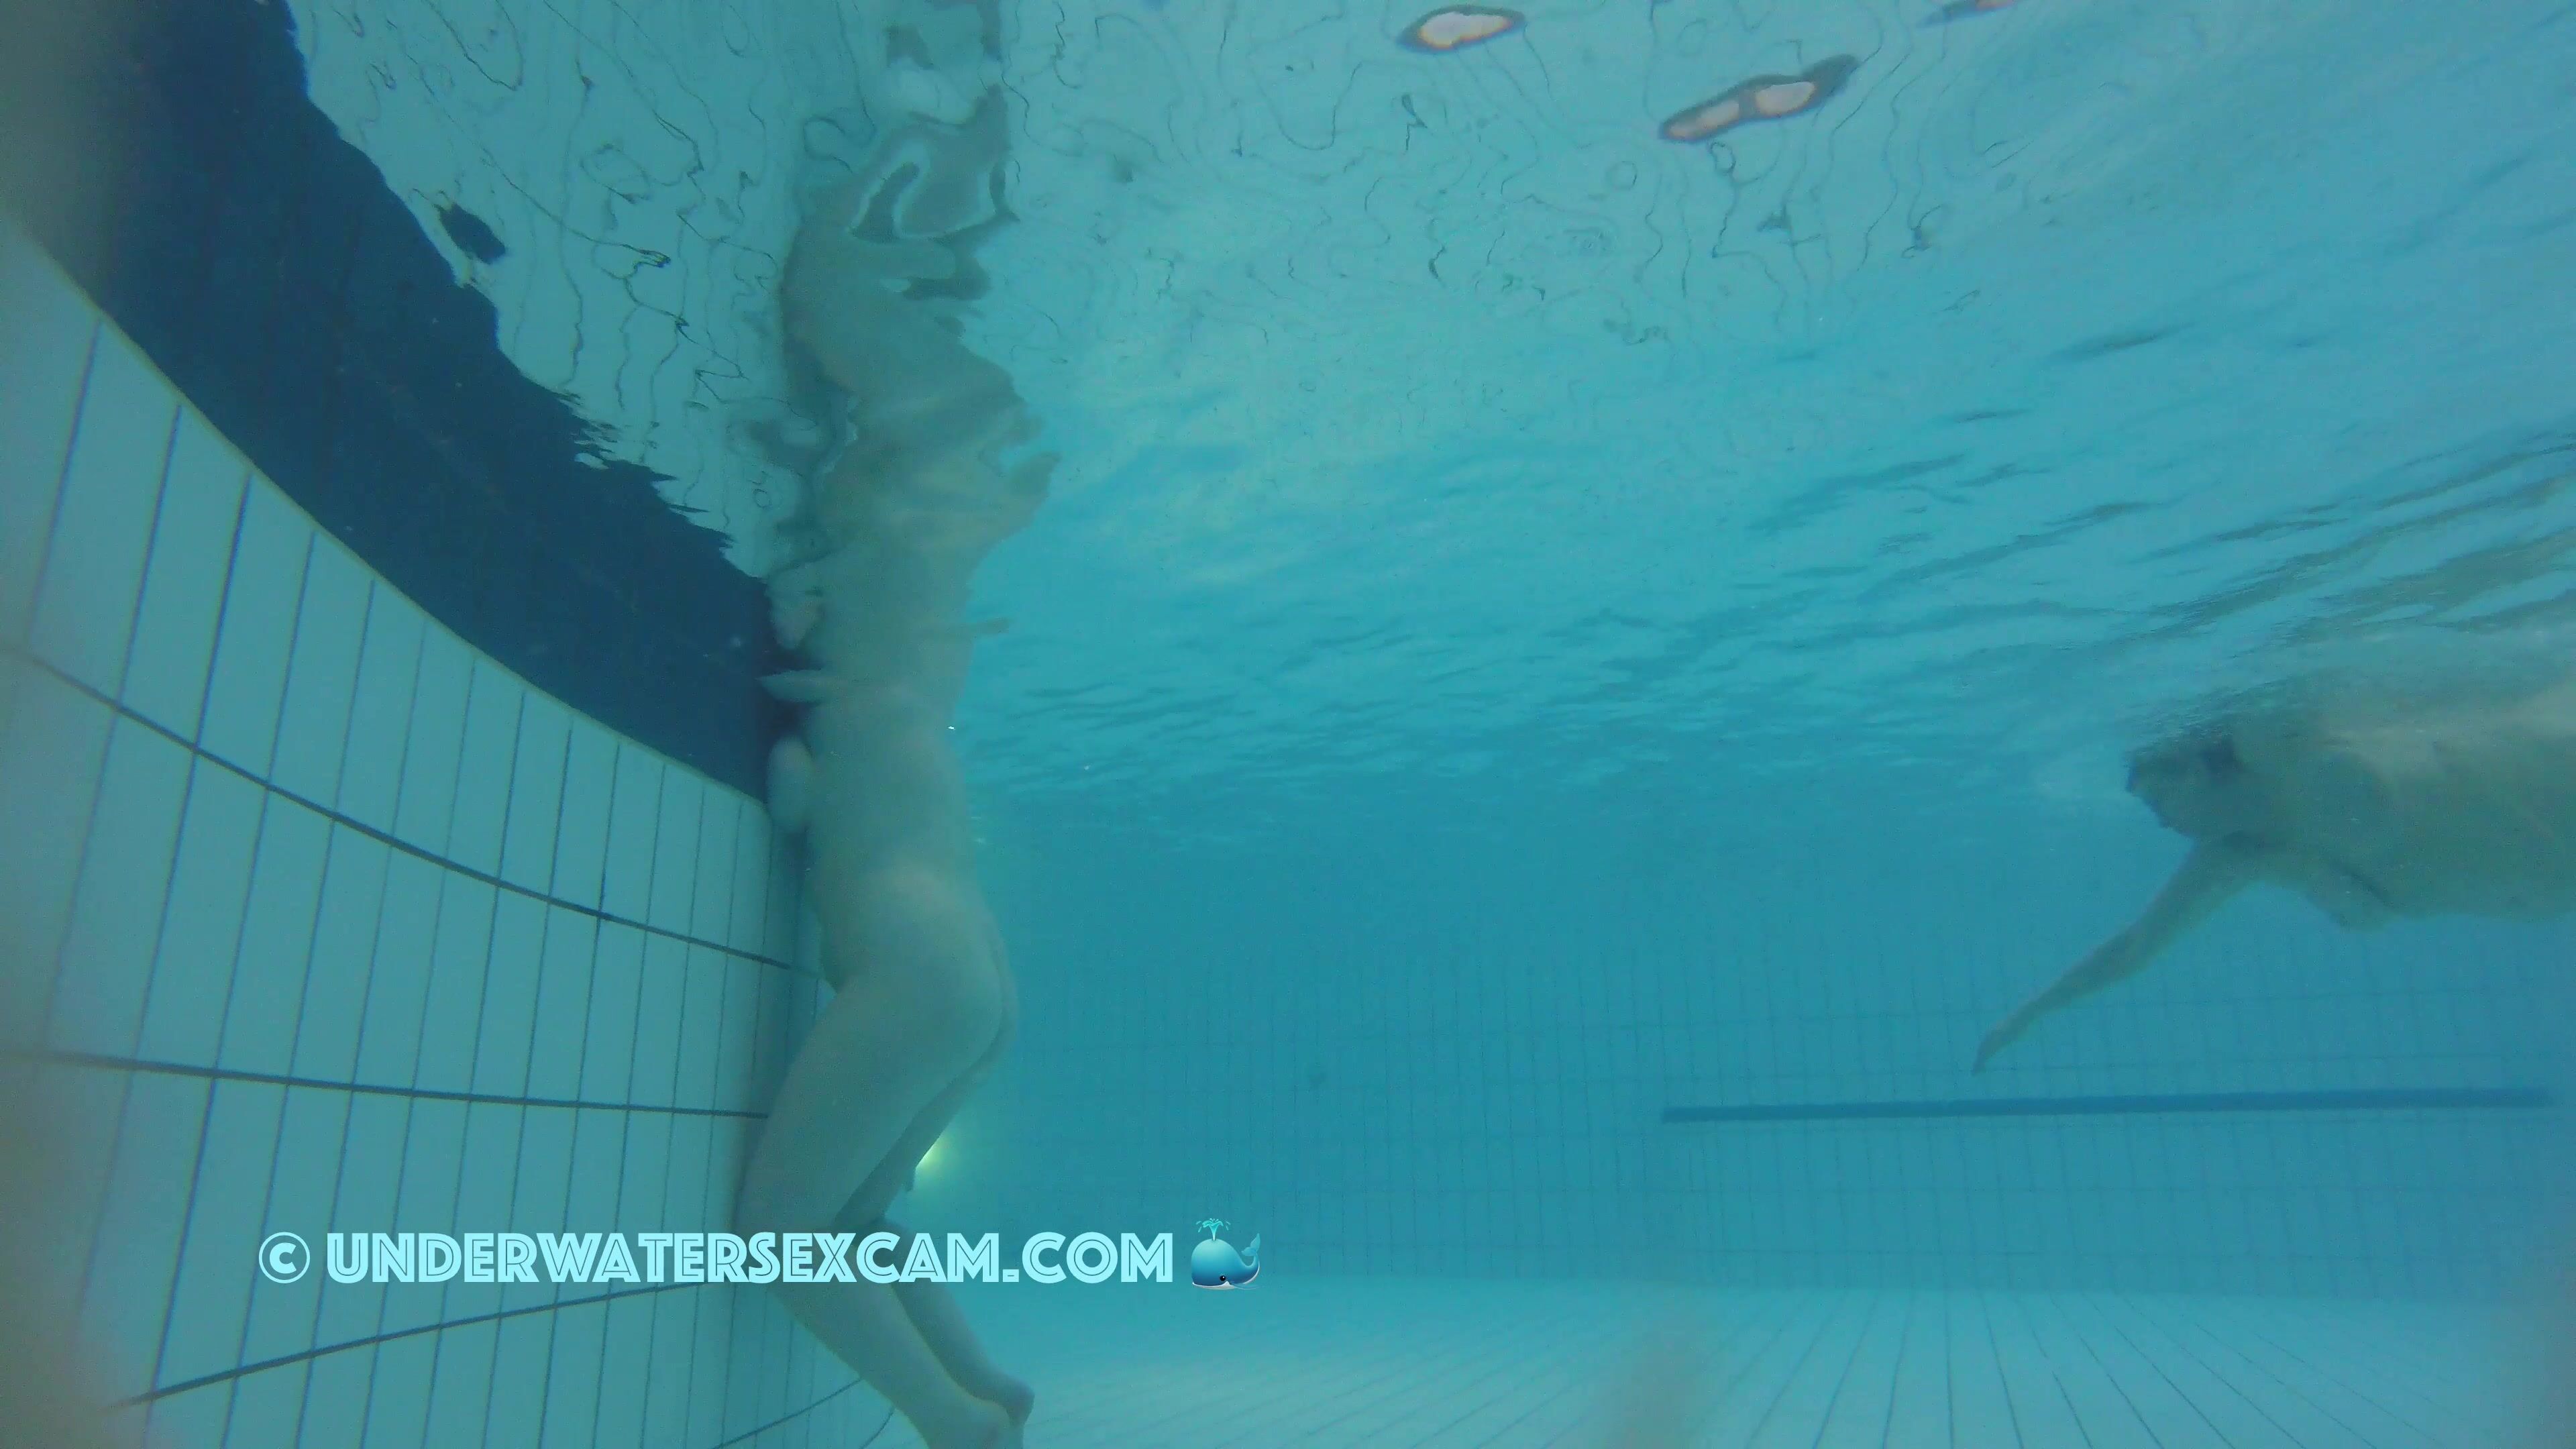 Milf underwater in empty pool